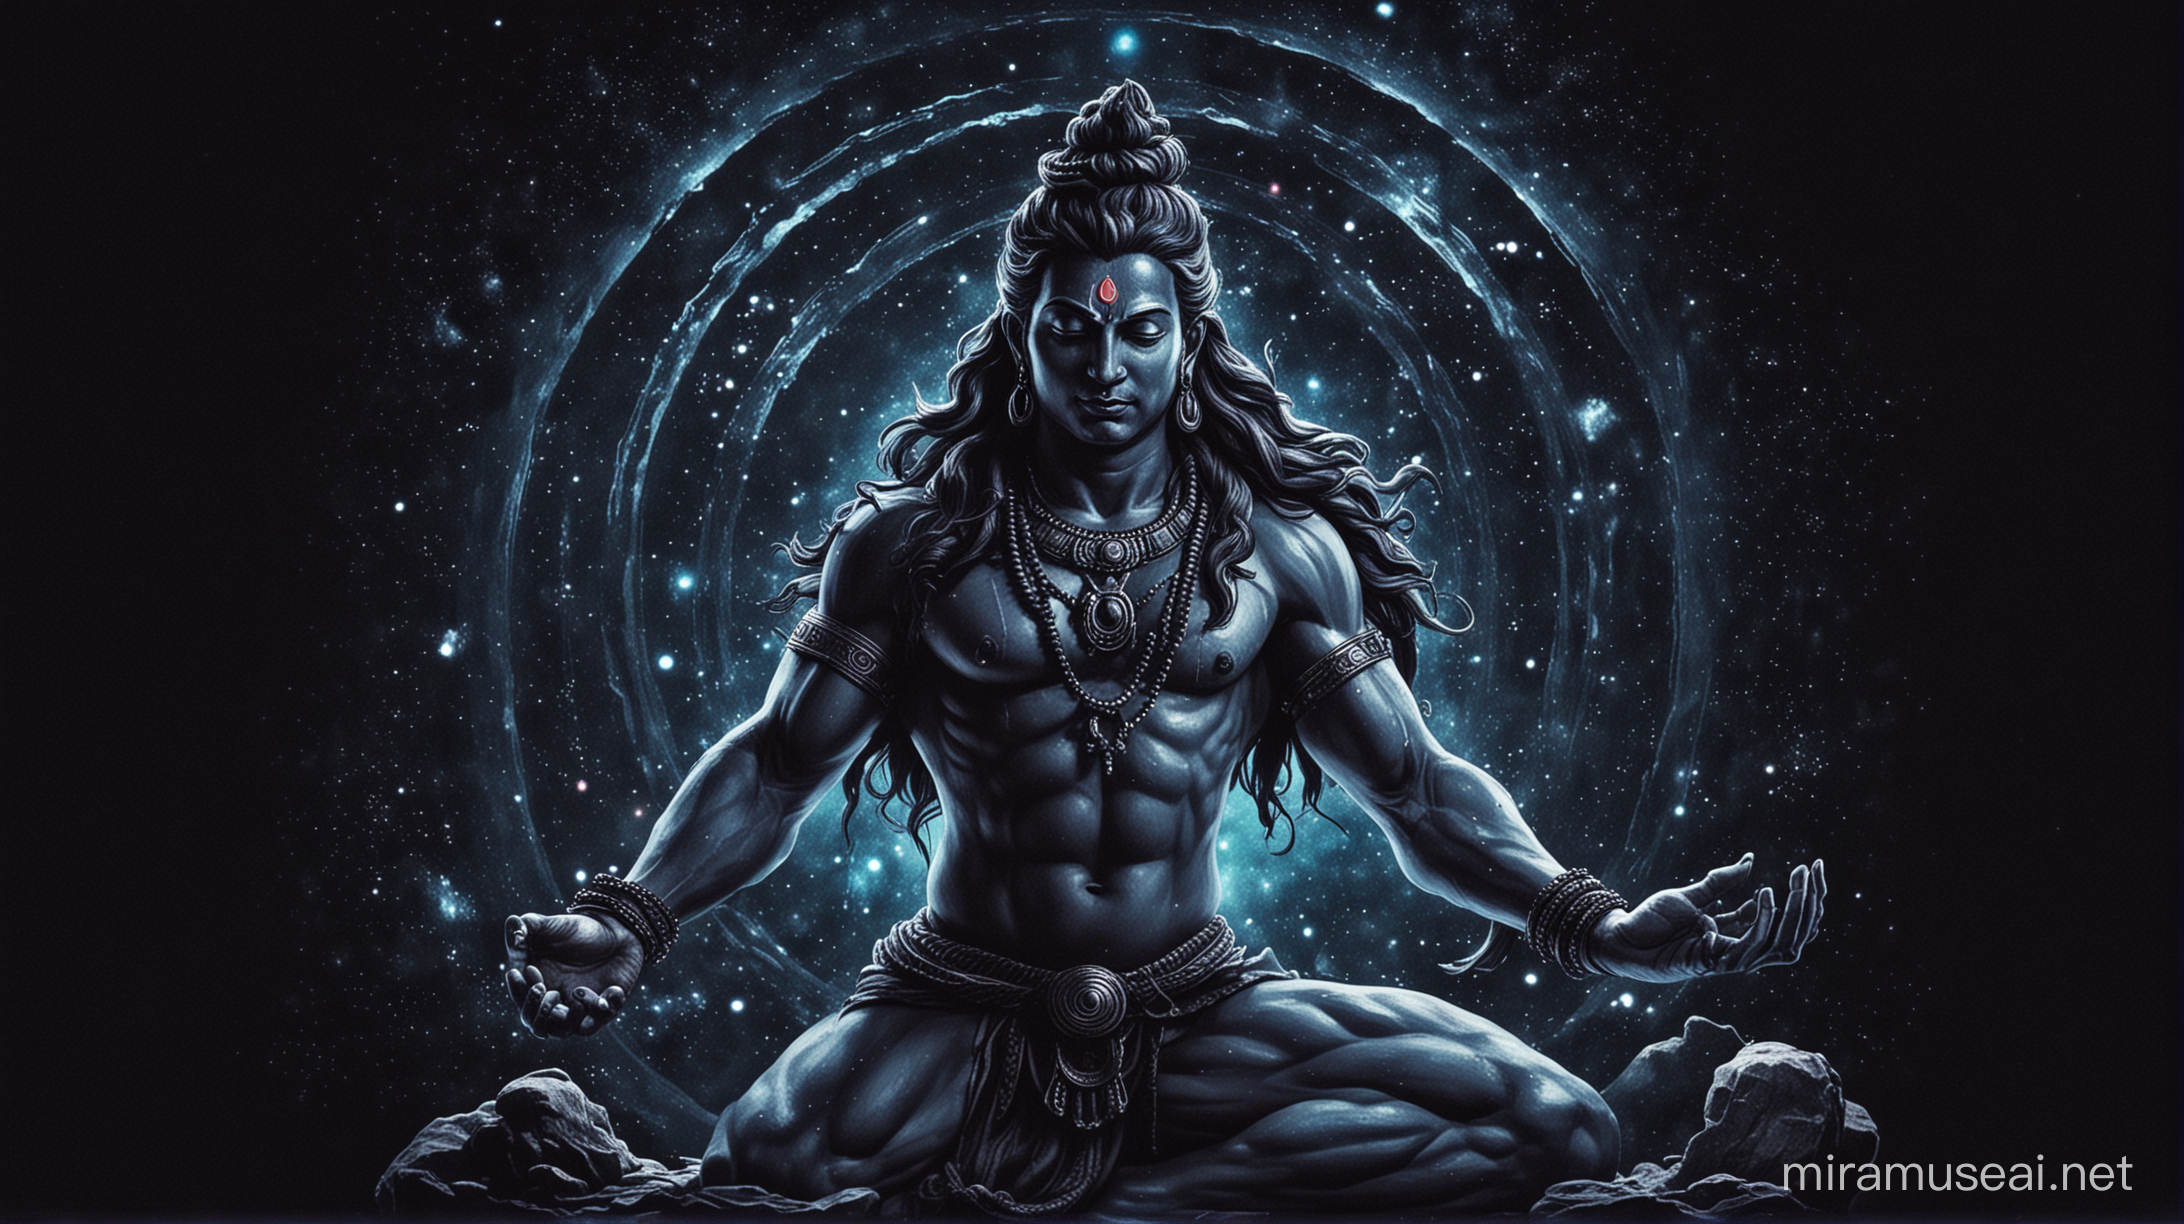 Cosmic Shiva in the Dark Mystical Deity Embracing the Cosmos